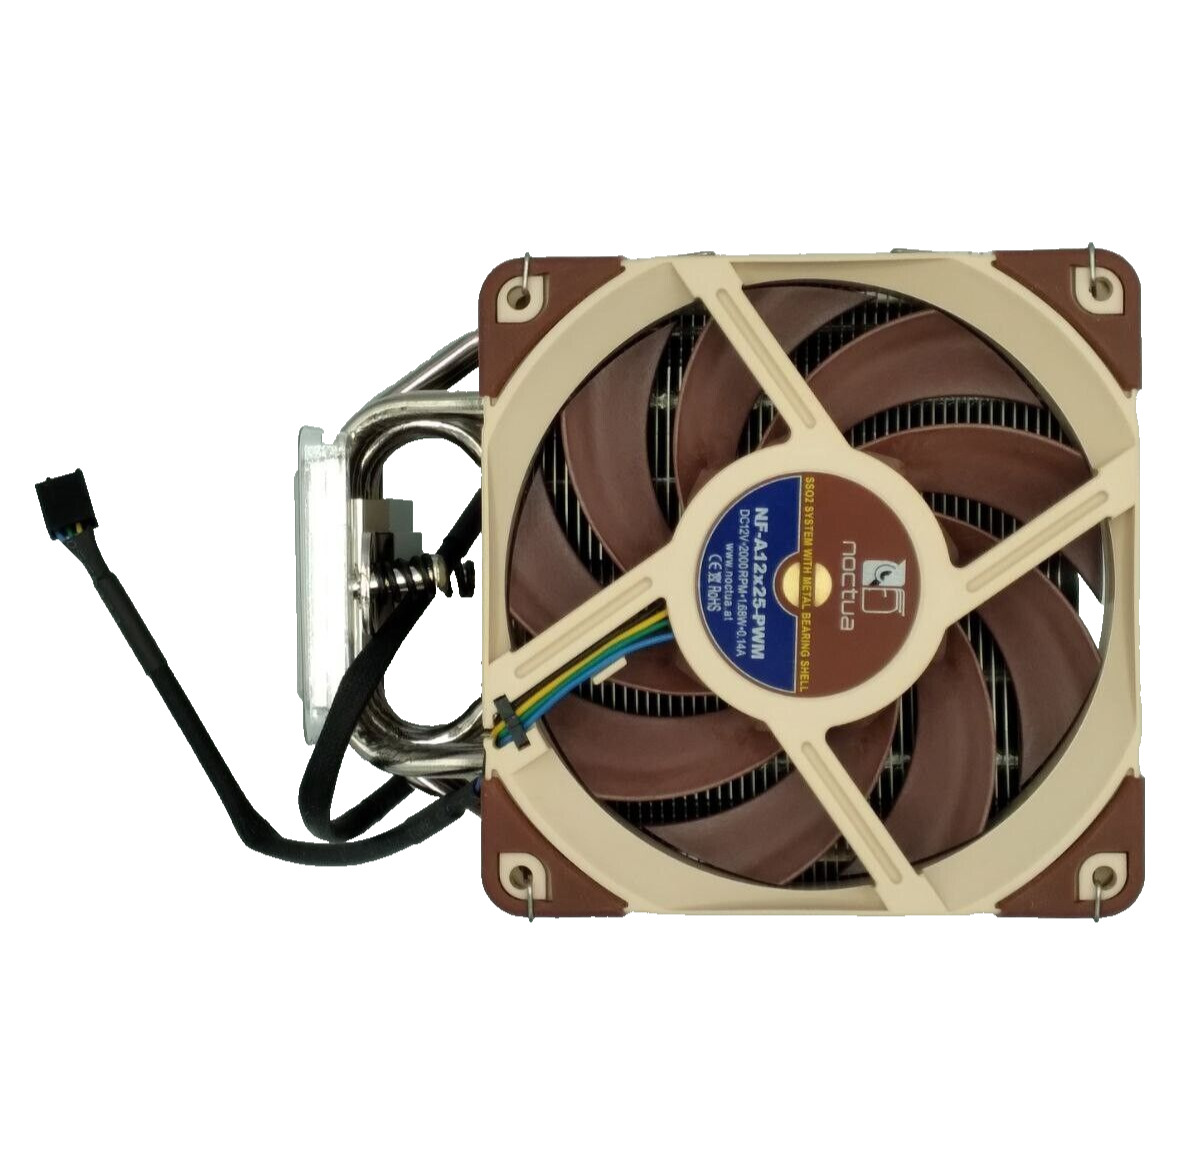 Noctua NH 12A Premium CPU Cooler High-Performance Quiet NF-A12x25 120mm Fans